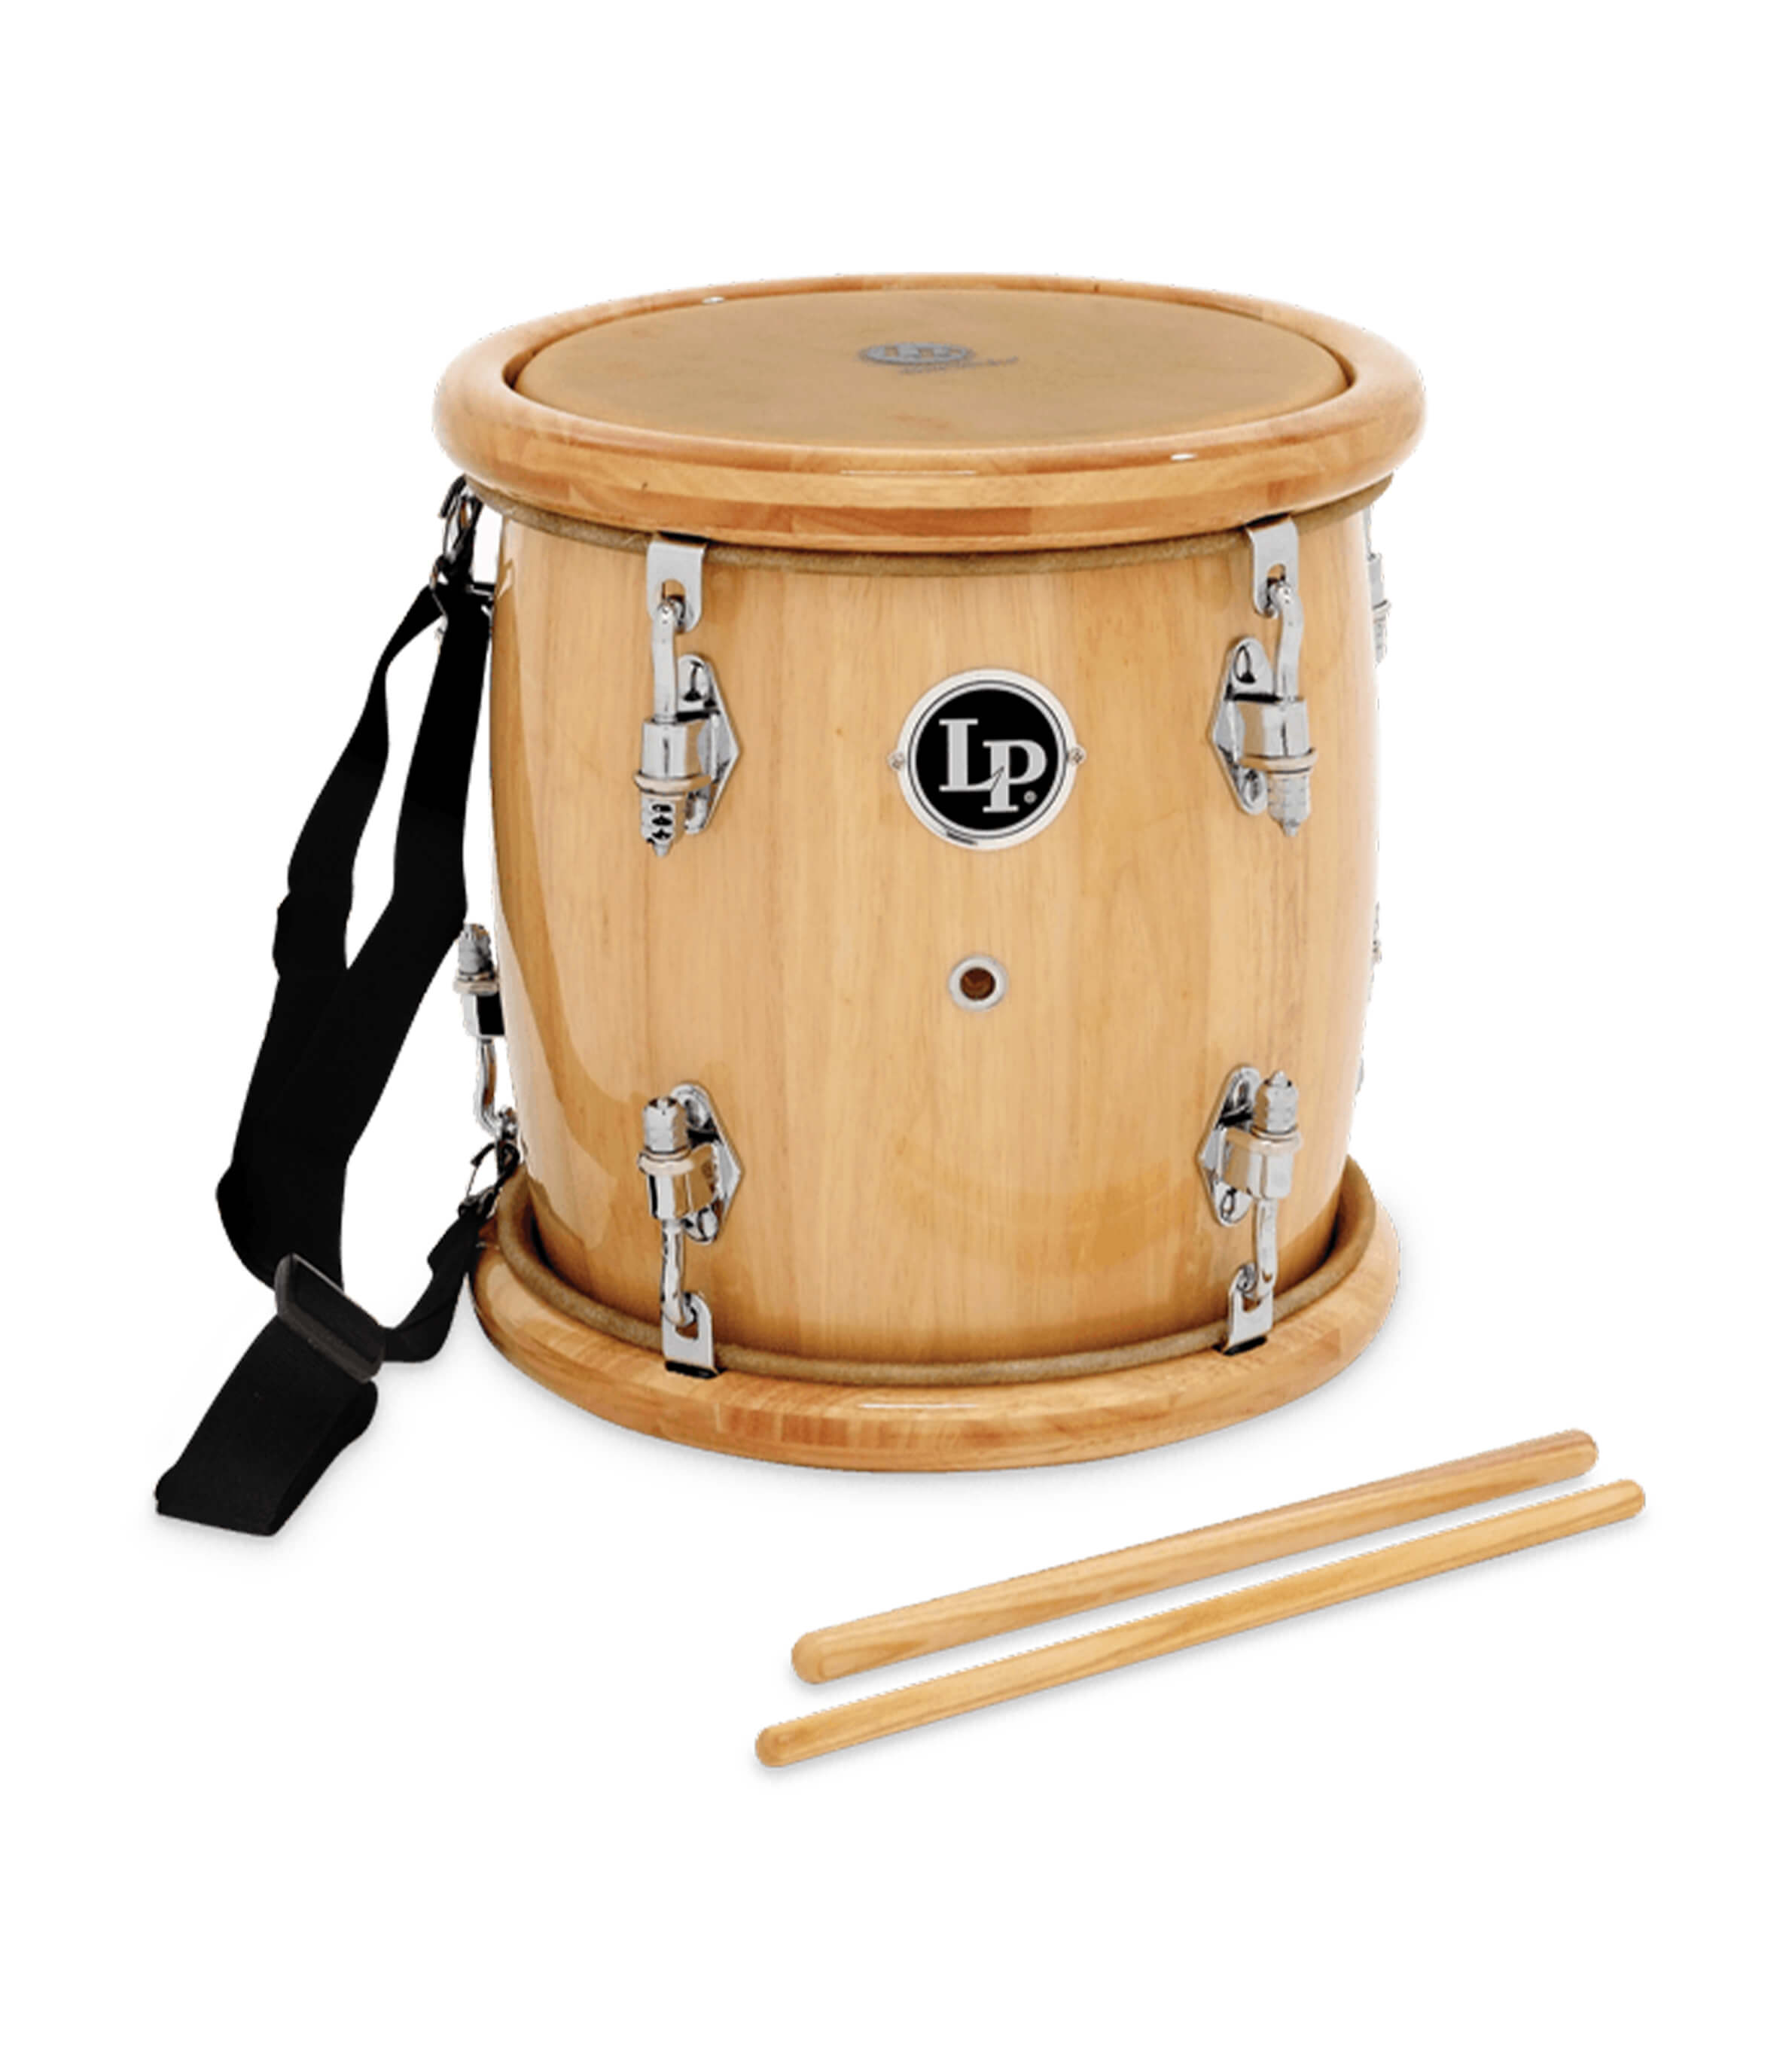 buy lp lp271 wd wood rim tambora with beaters